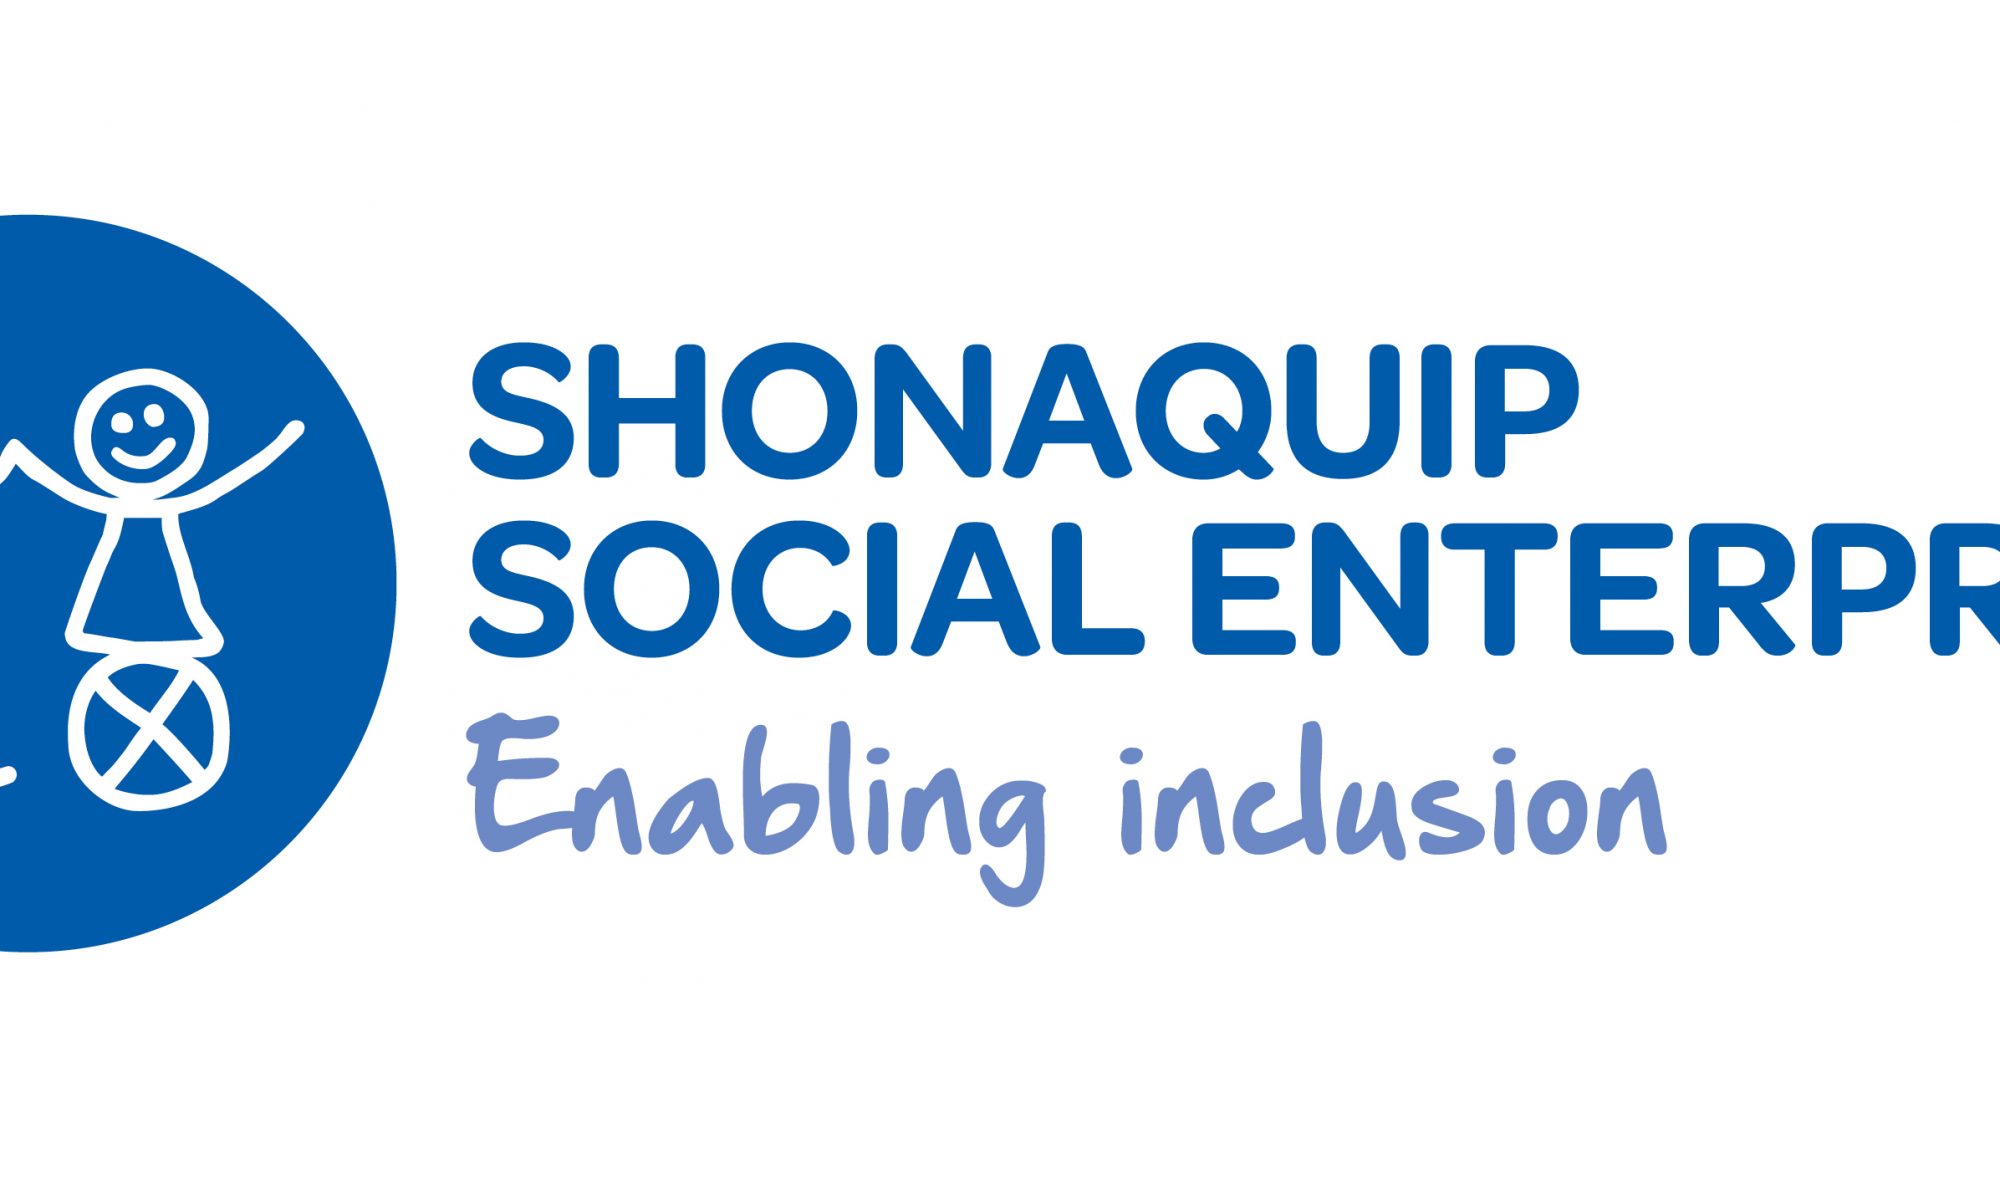 Shonaquip Social Enterprise